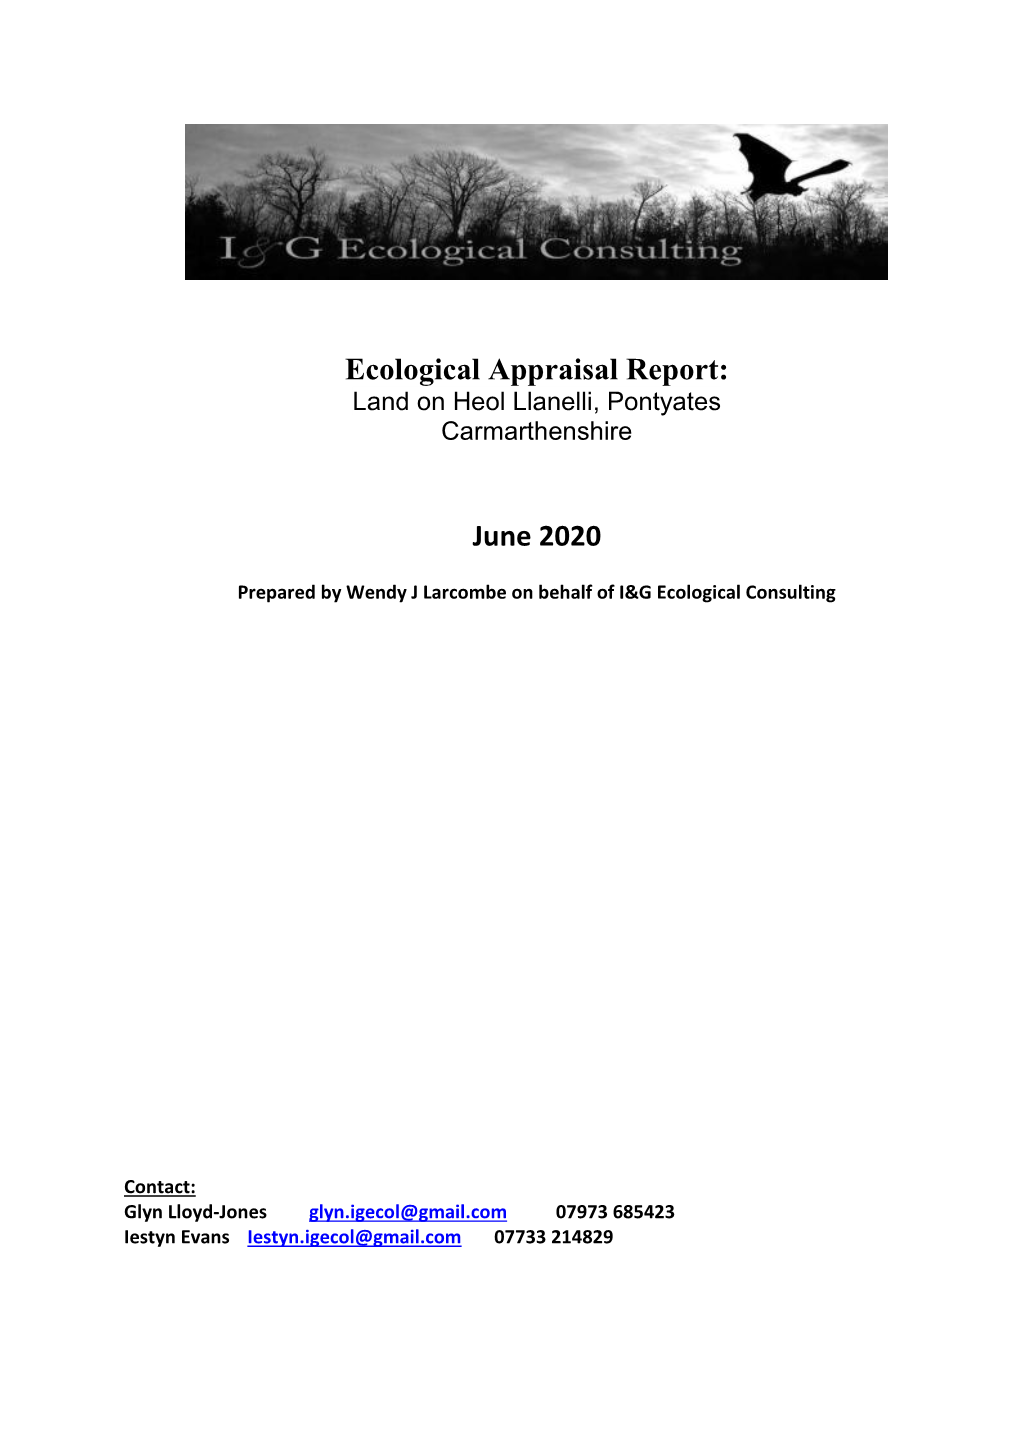 Ecological Appraisal Report: Land on Heol Llanelli, Pontyates Carmarthenshire